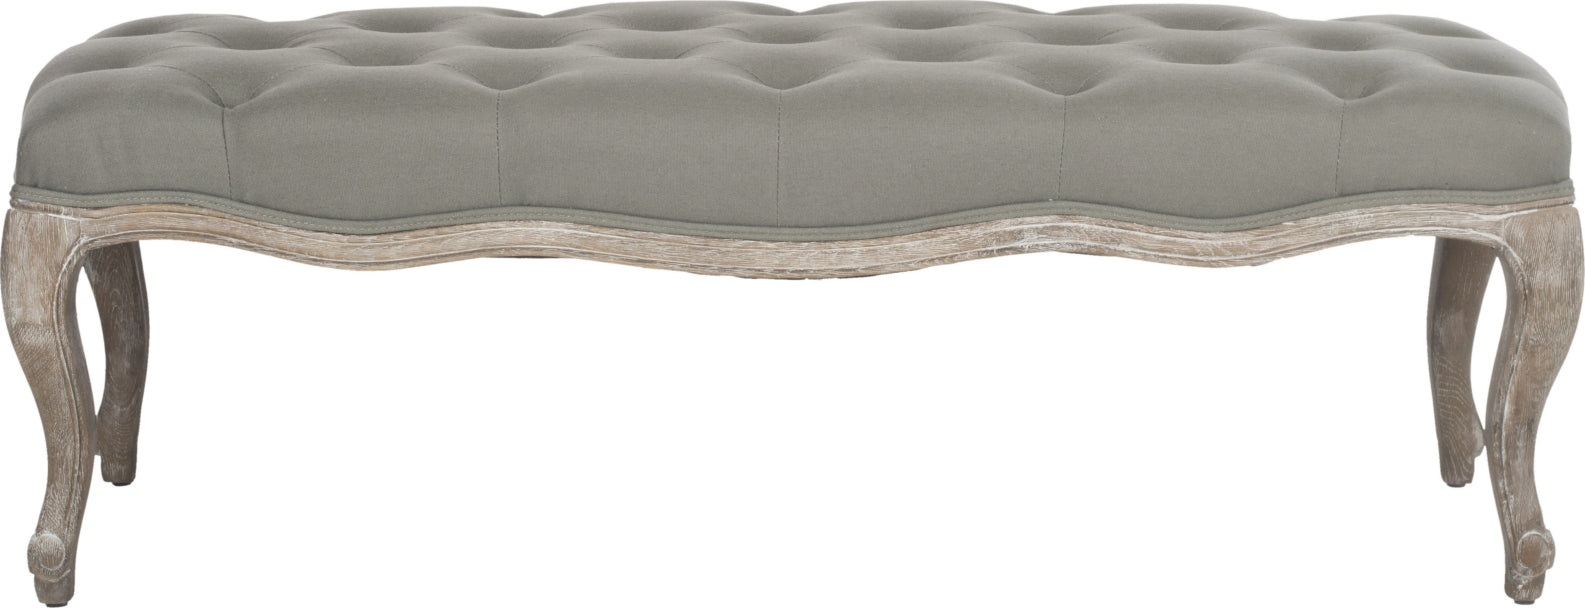 Safavieh Ramsey Bench Sea Mist and Pickled Oak Finish Furniture main image